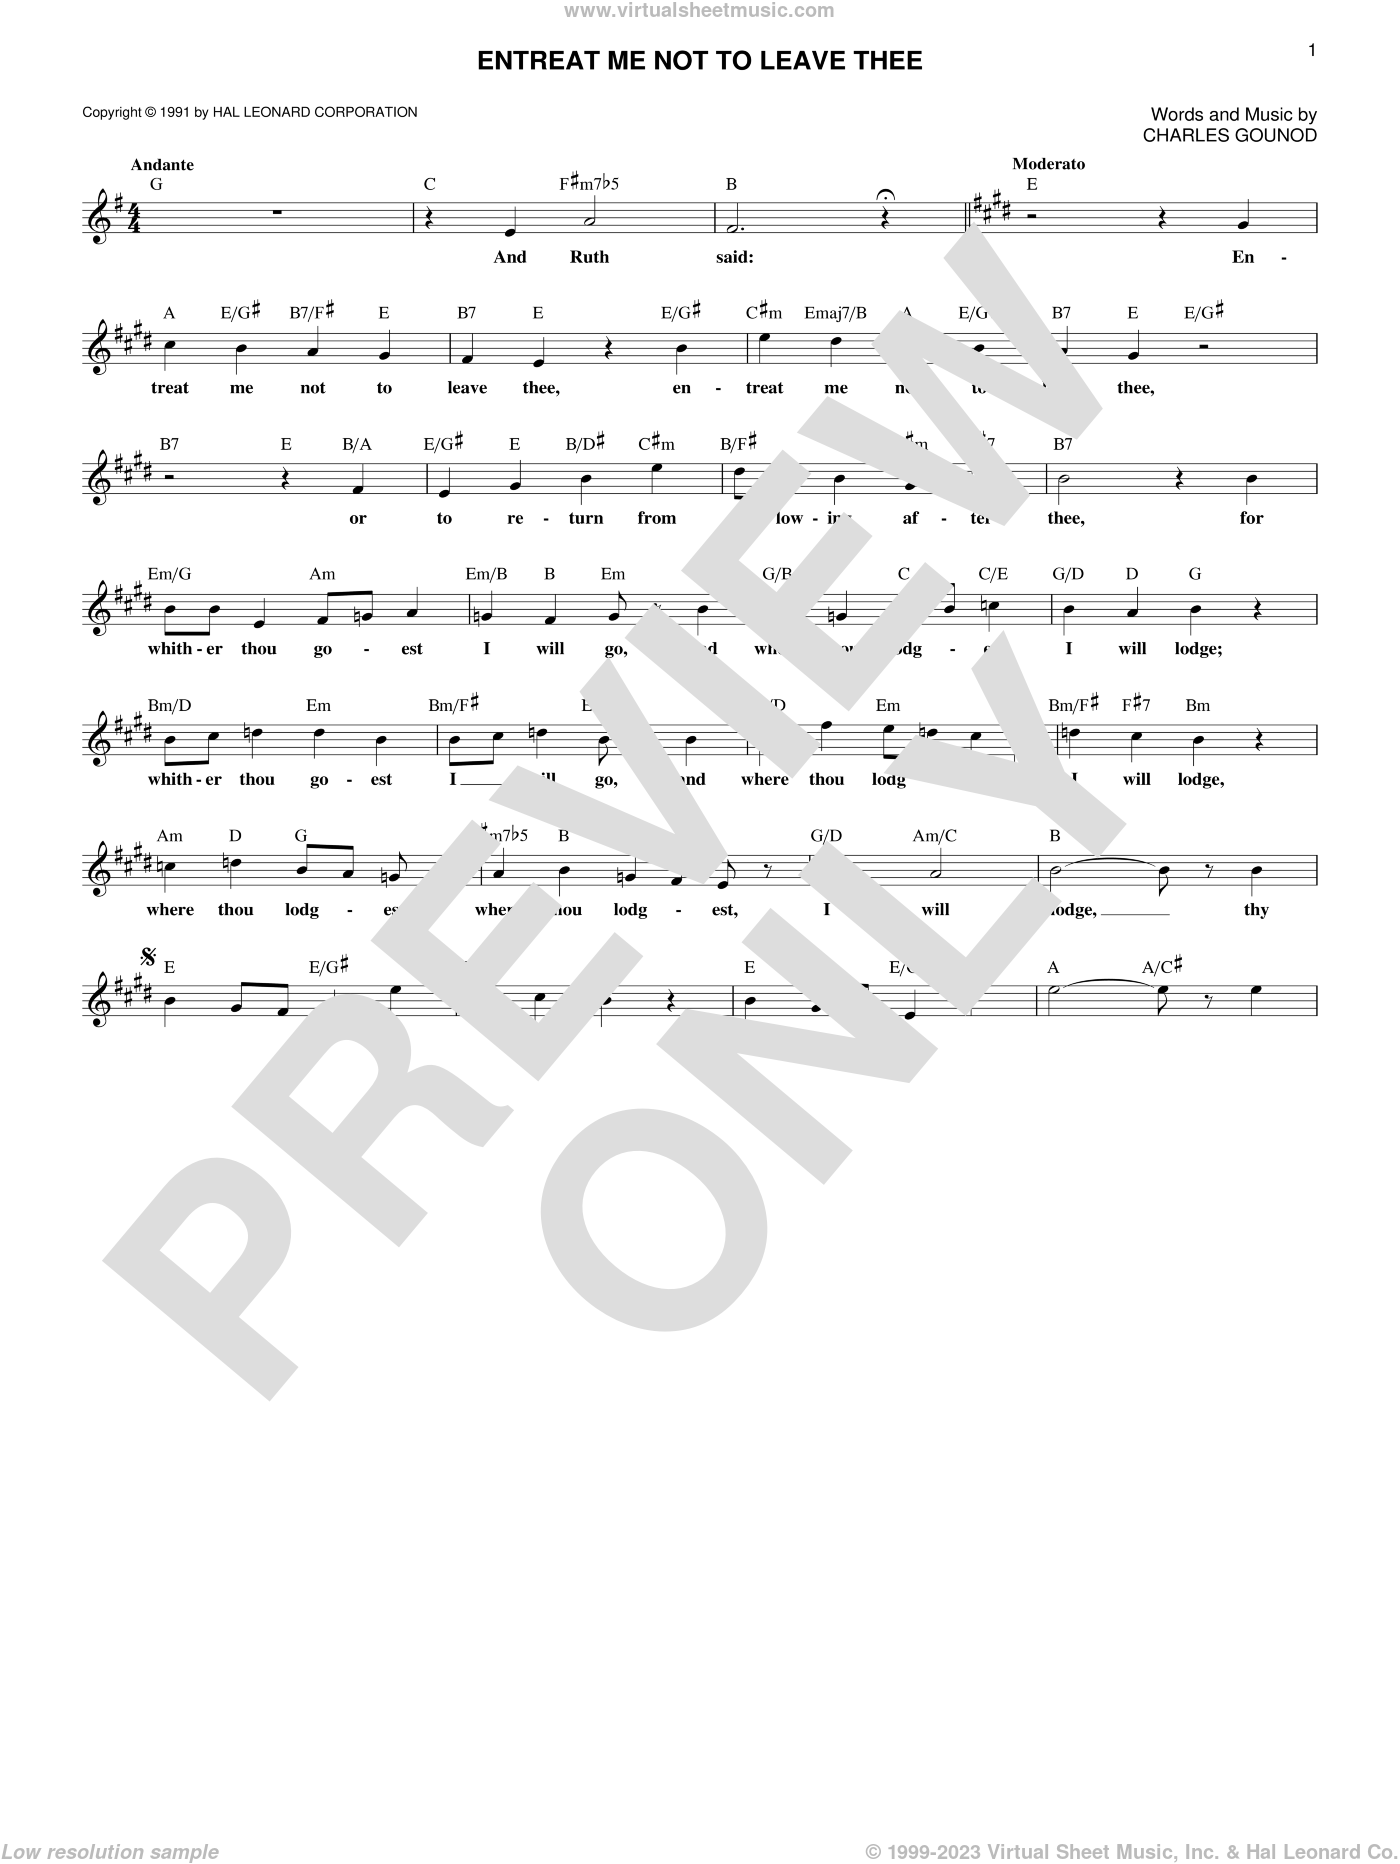 Anton Rubinstein 'Melody In F' Sheet Music, Chords & Lyrics